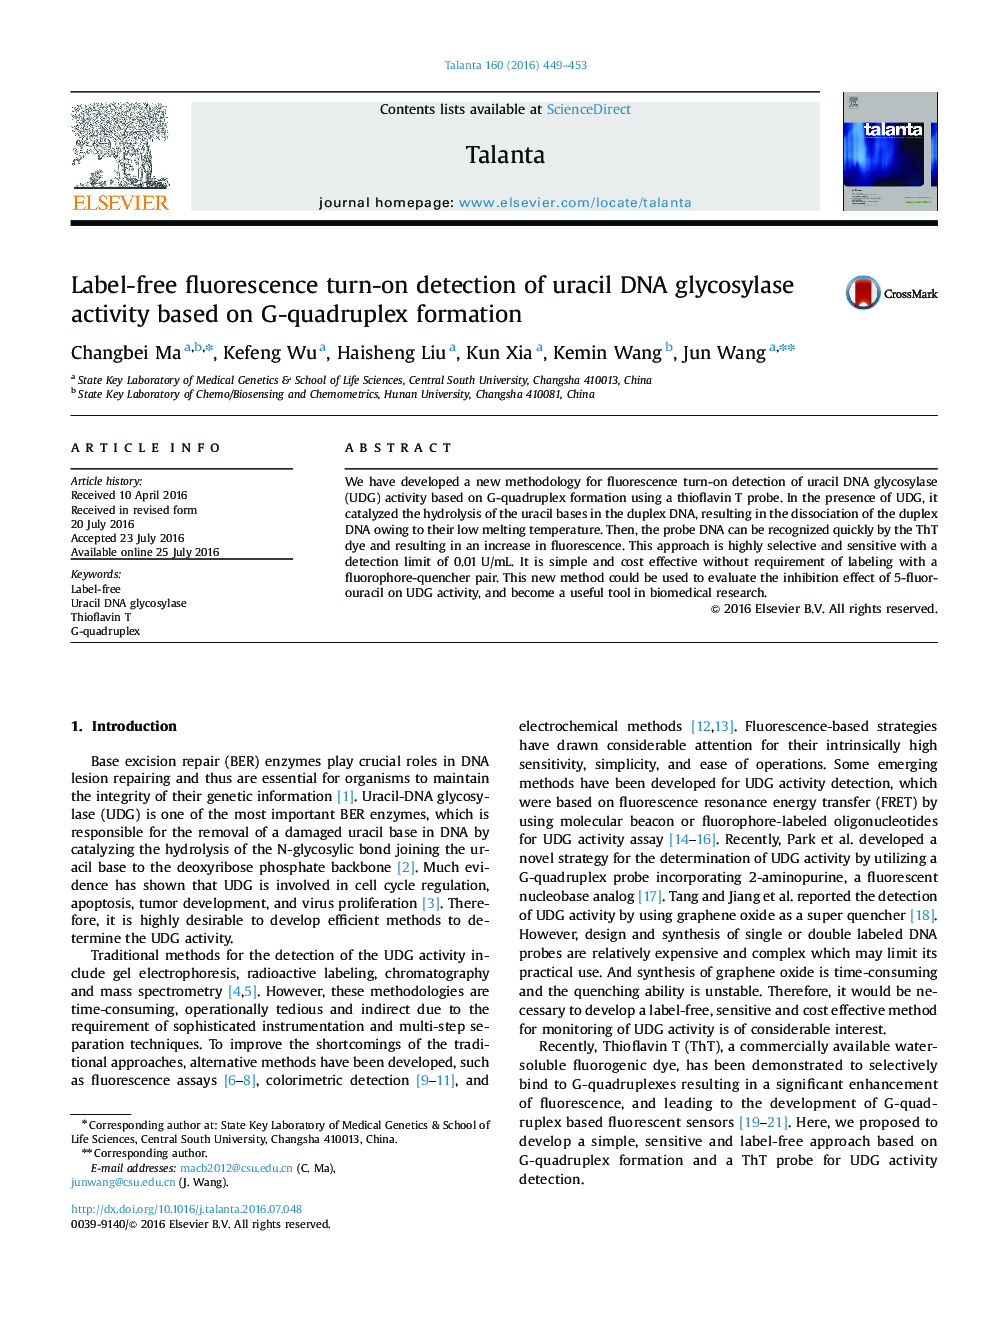 Label-free fluorescence turn-on detection of uracil DNA glycosylase activity based on G-quadruplex formation